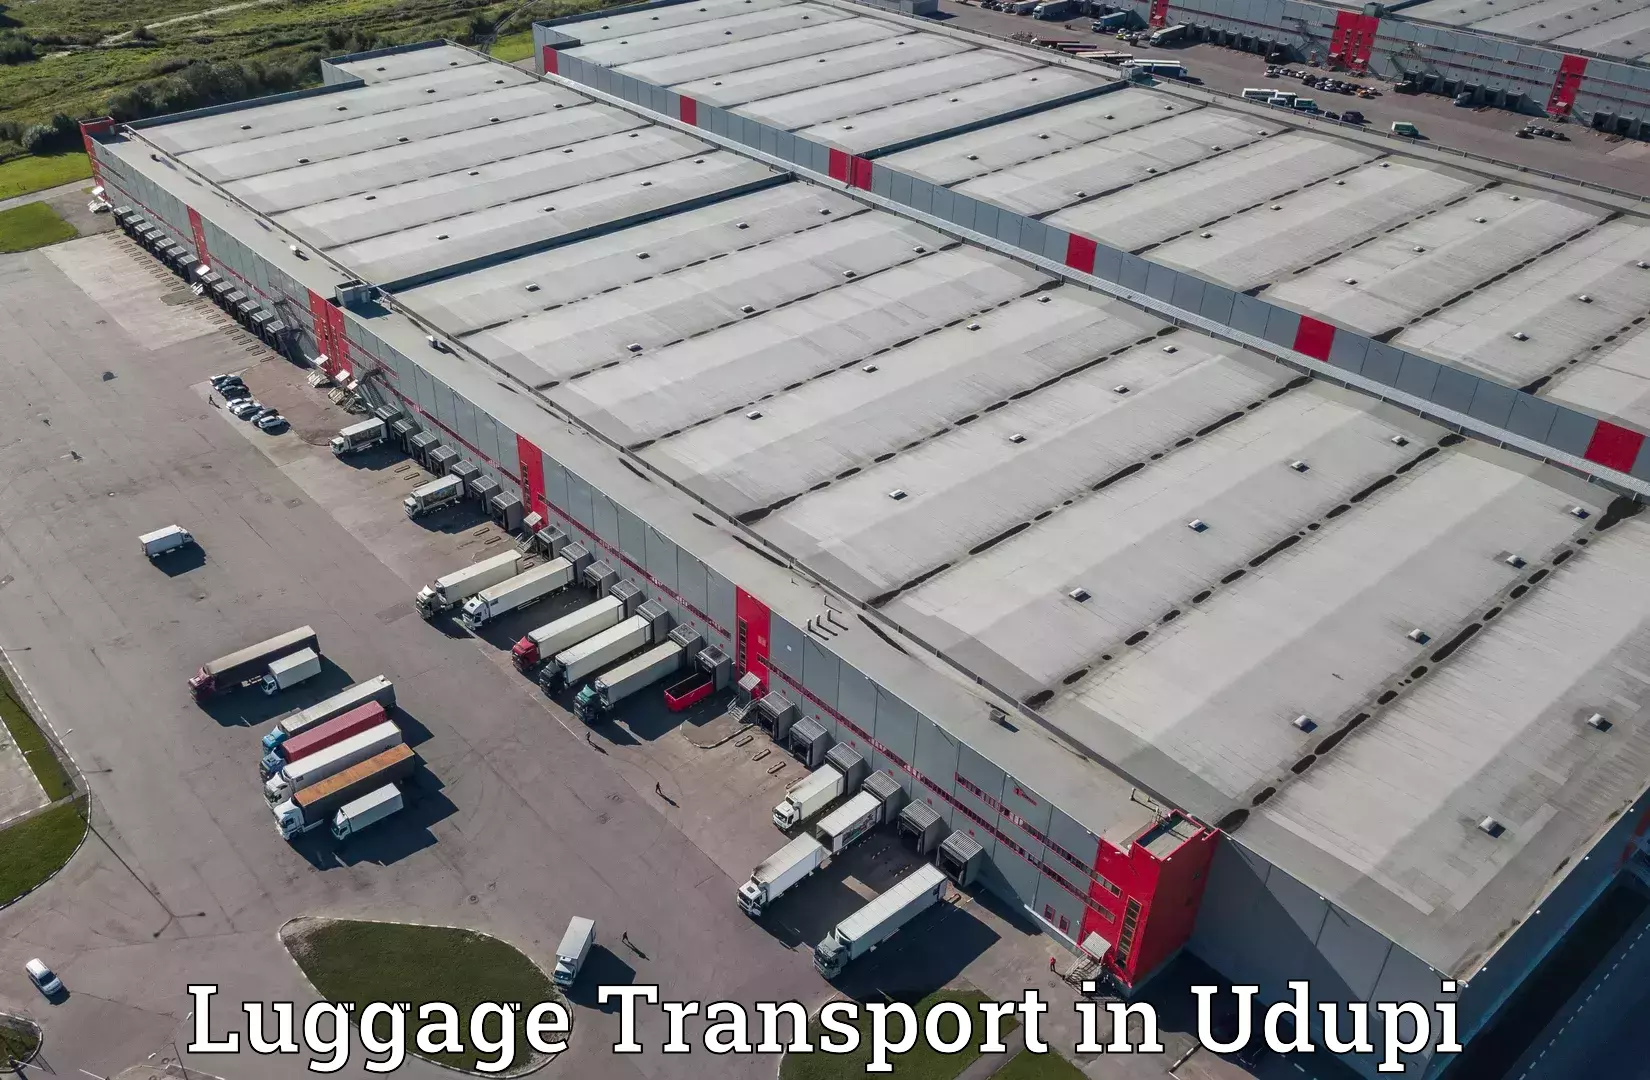 Luggage delivery logistics in Udupi